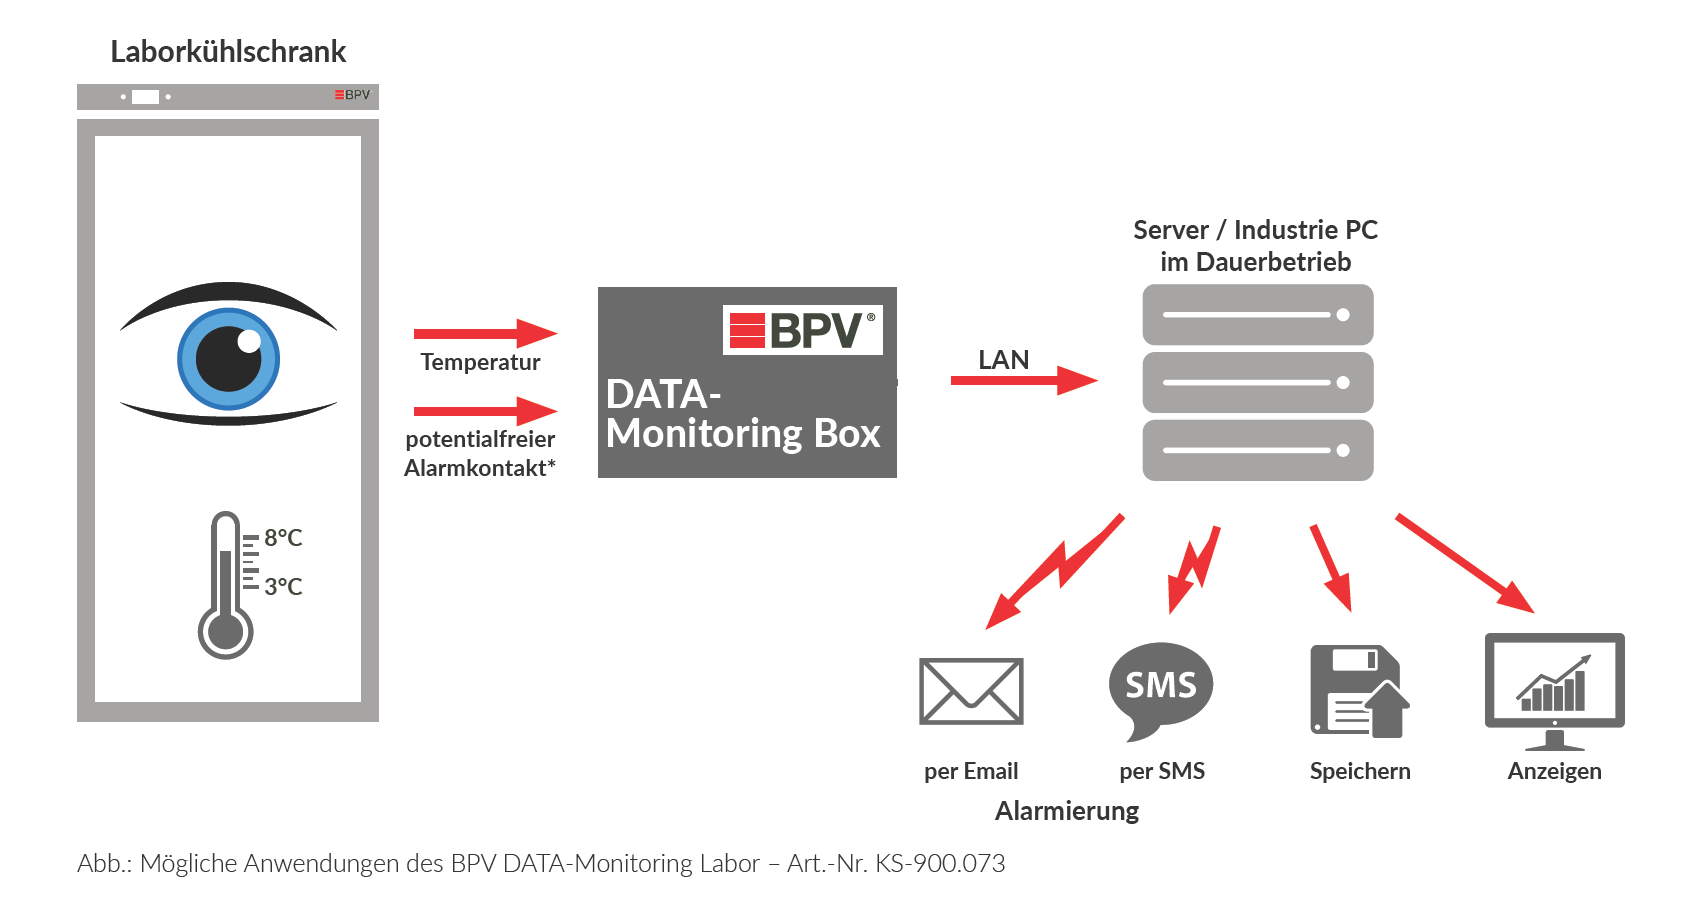 BPV DATA-Monitoring Labor